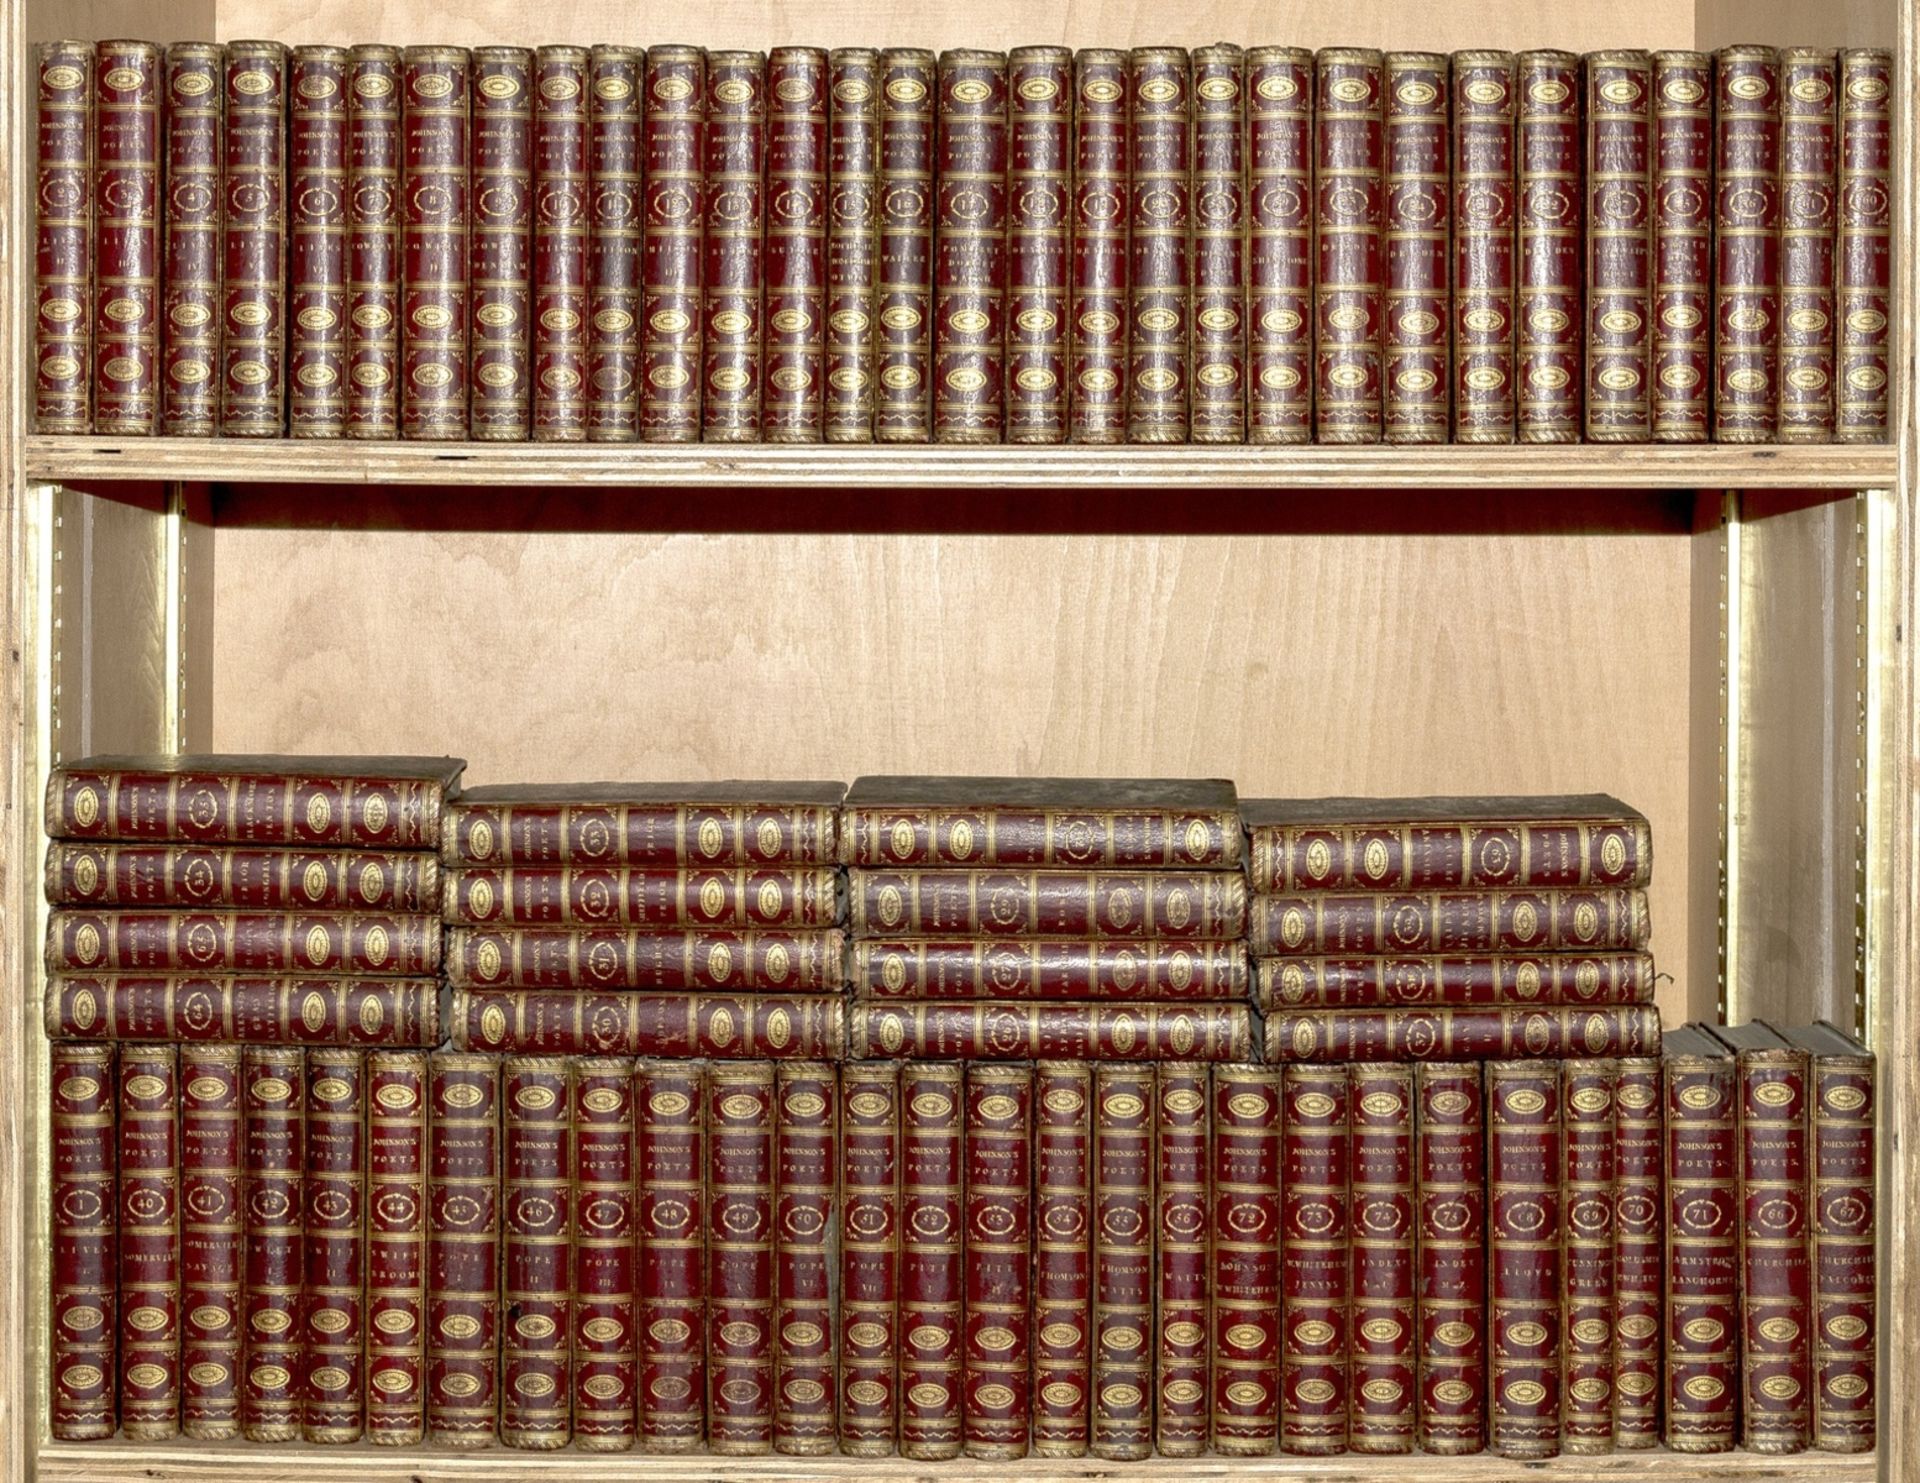 Johnson (Samuel) The Works of the English Poets, 74 vol. (of 75), Printed by John Nichols, 1790.